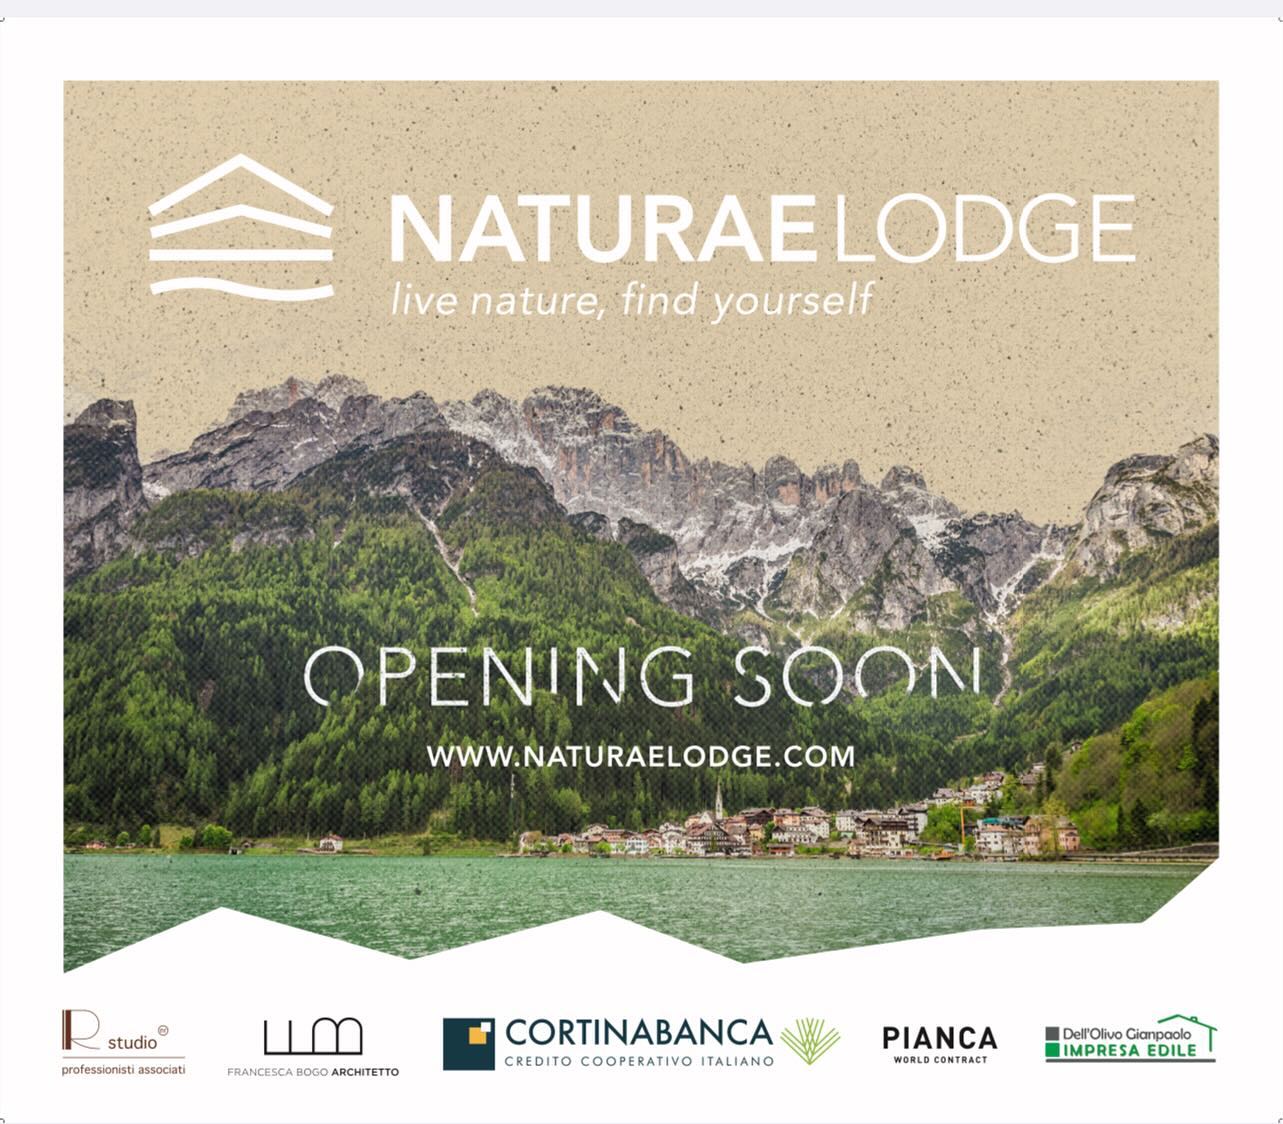 Opening Soon NaturaeLodge